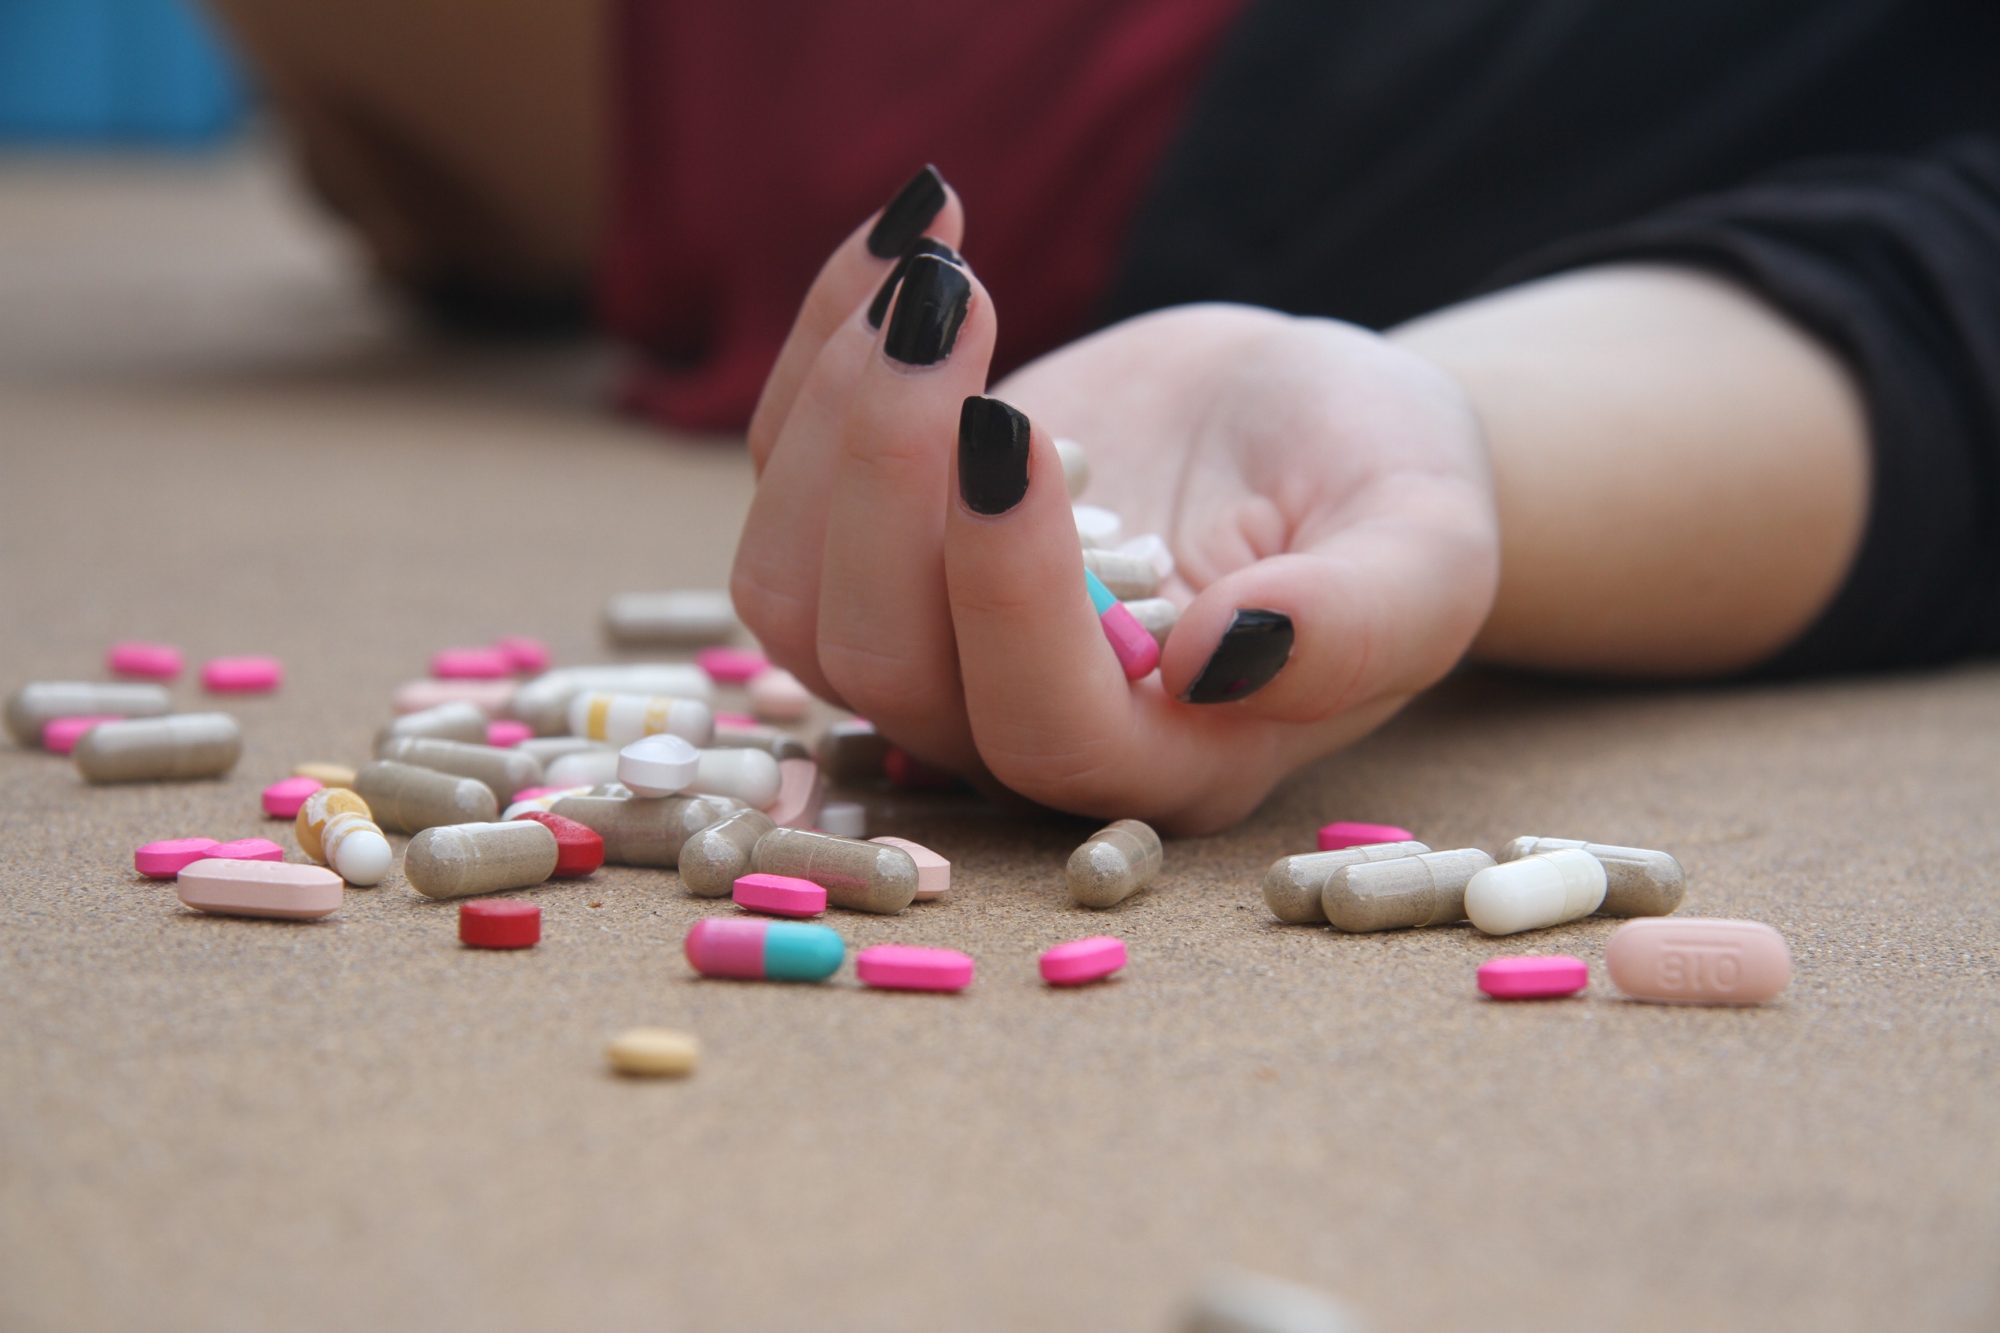 What causes Drug Addiction